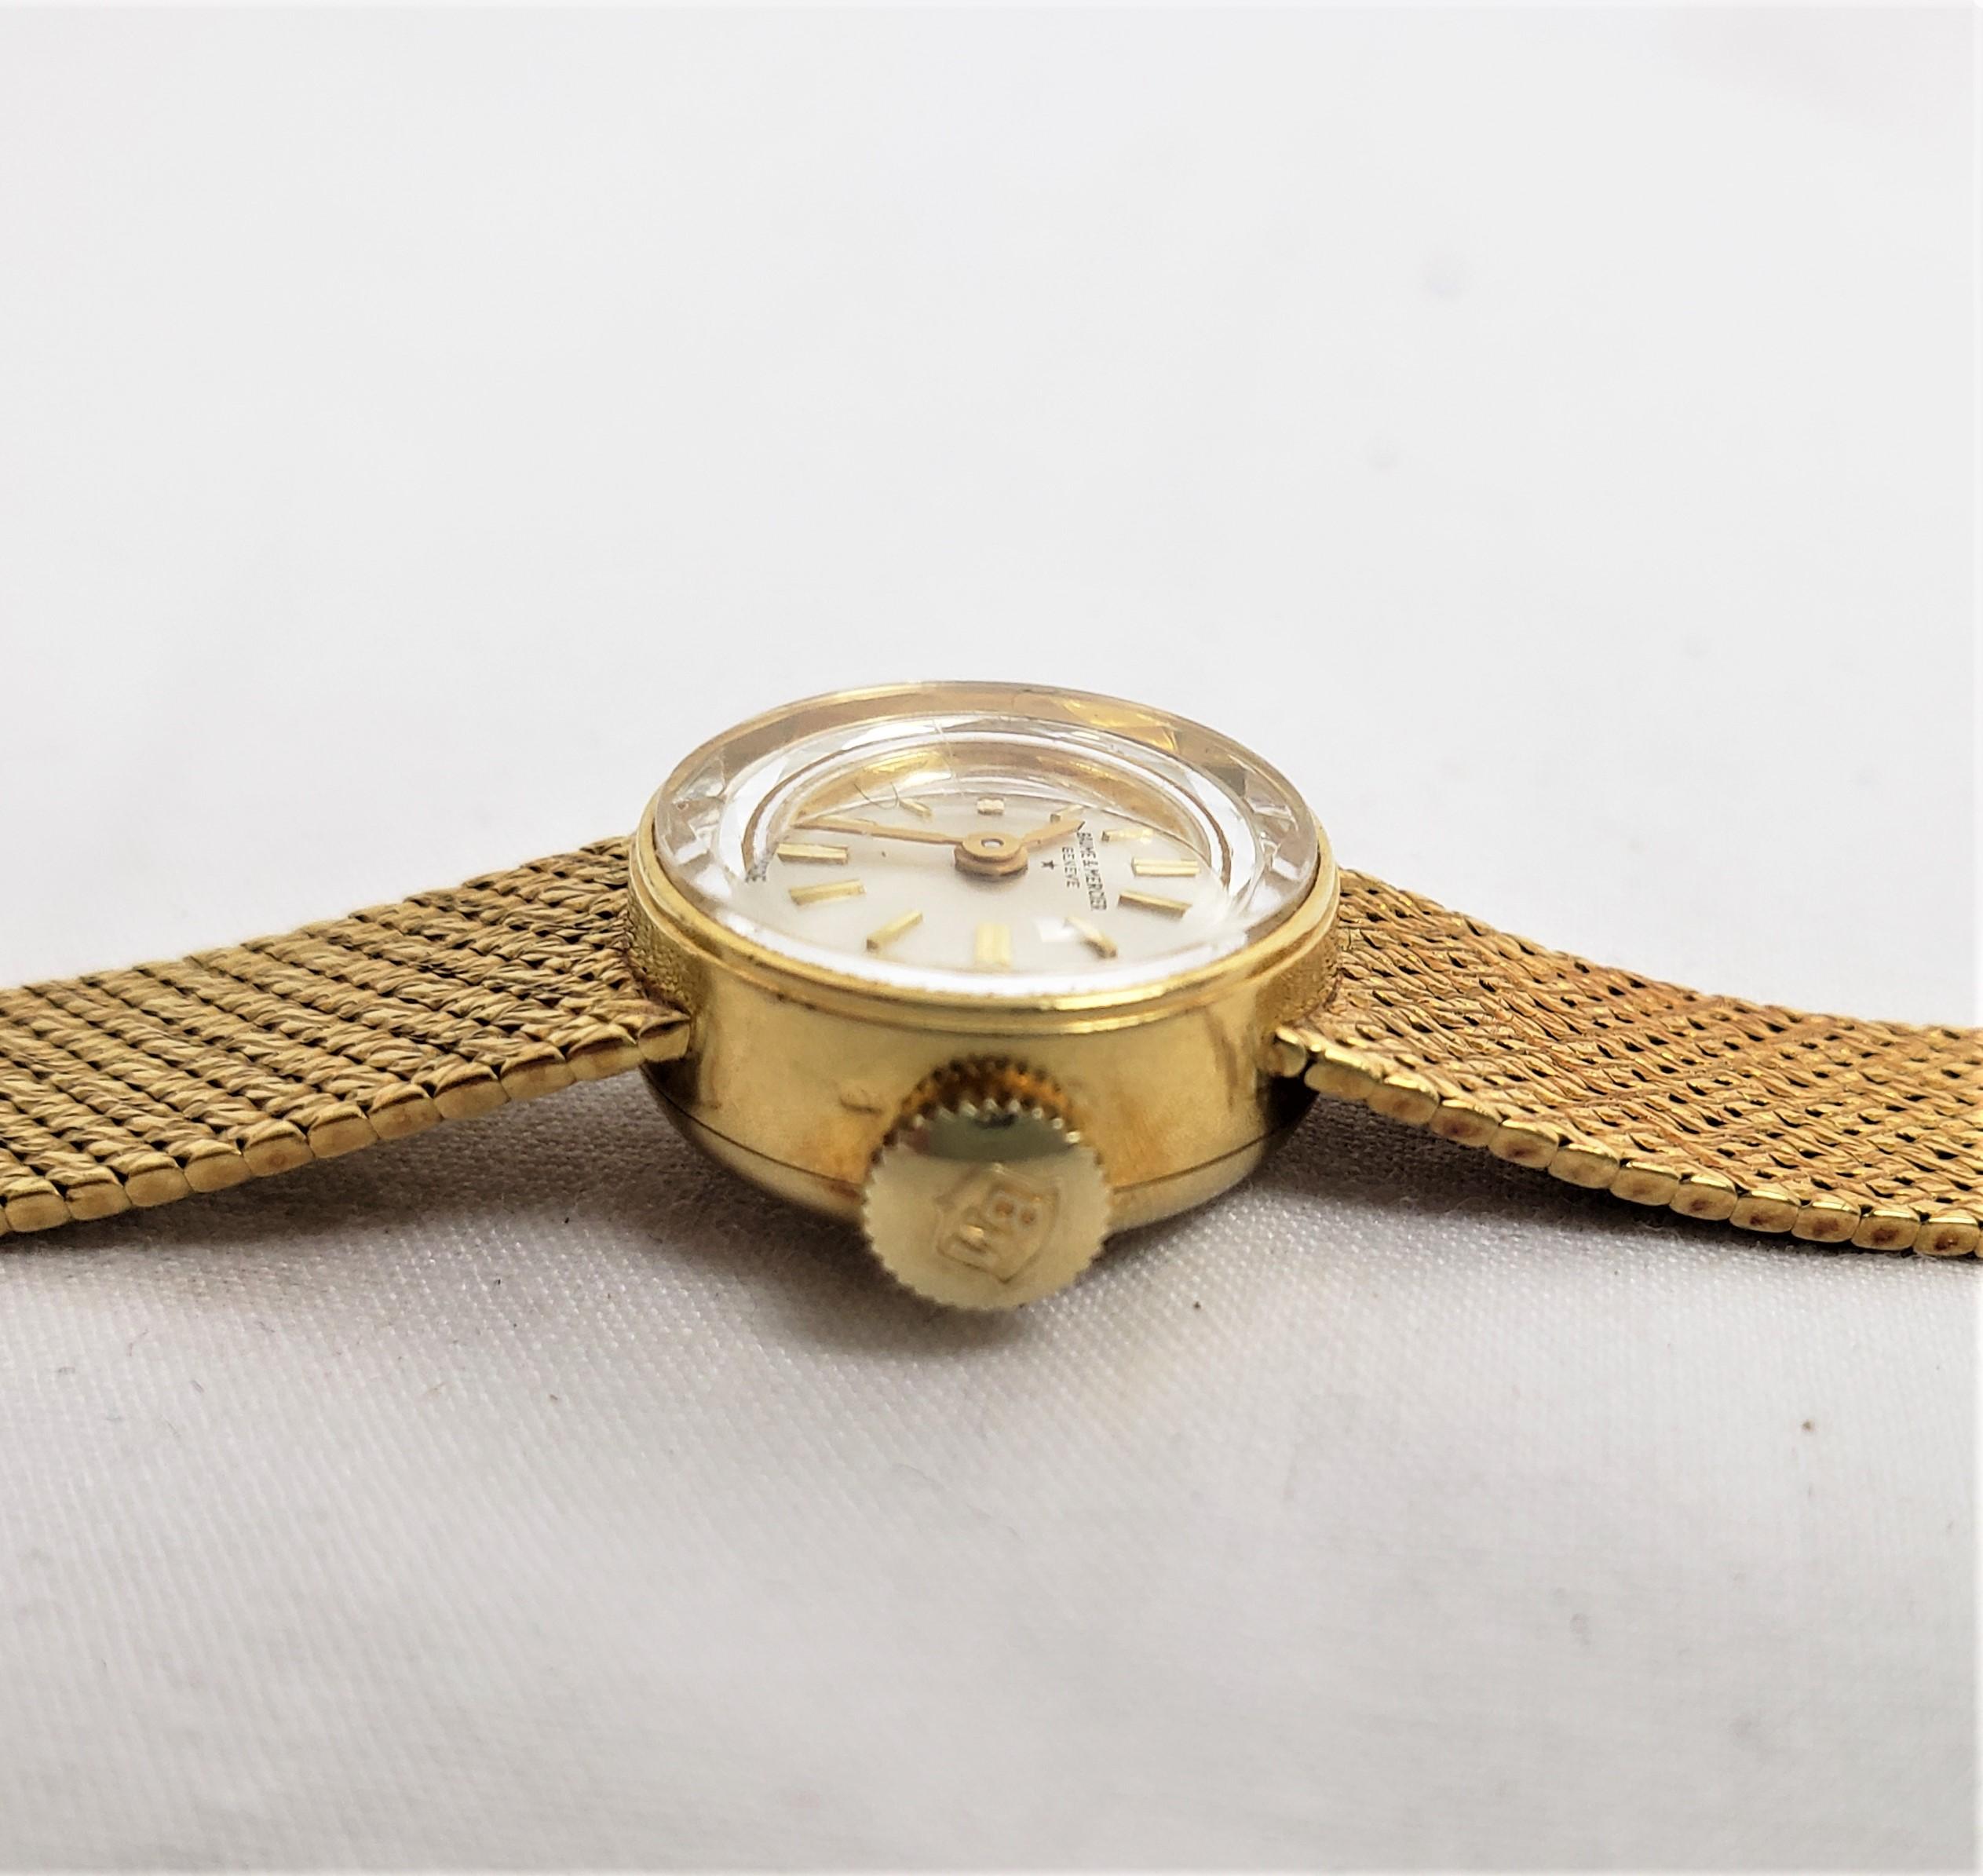 Baume Mercier 18 Karat Yellow Gold Ladies Wristwatch & Bracelet & Original Box For Sale 3